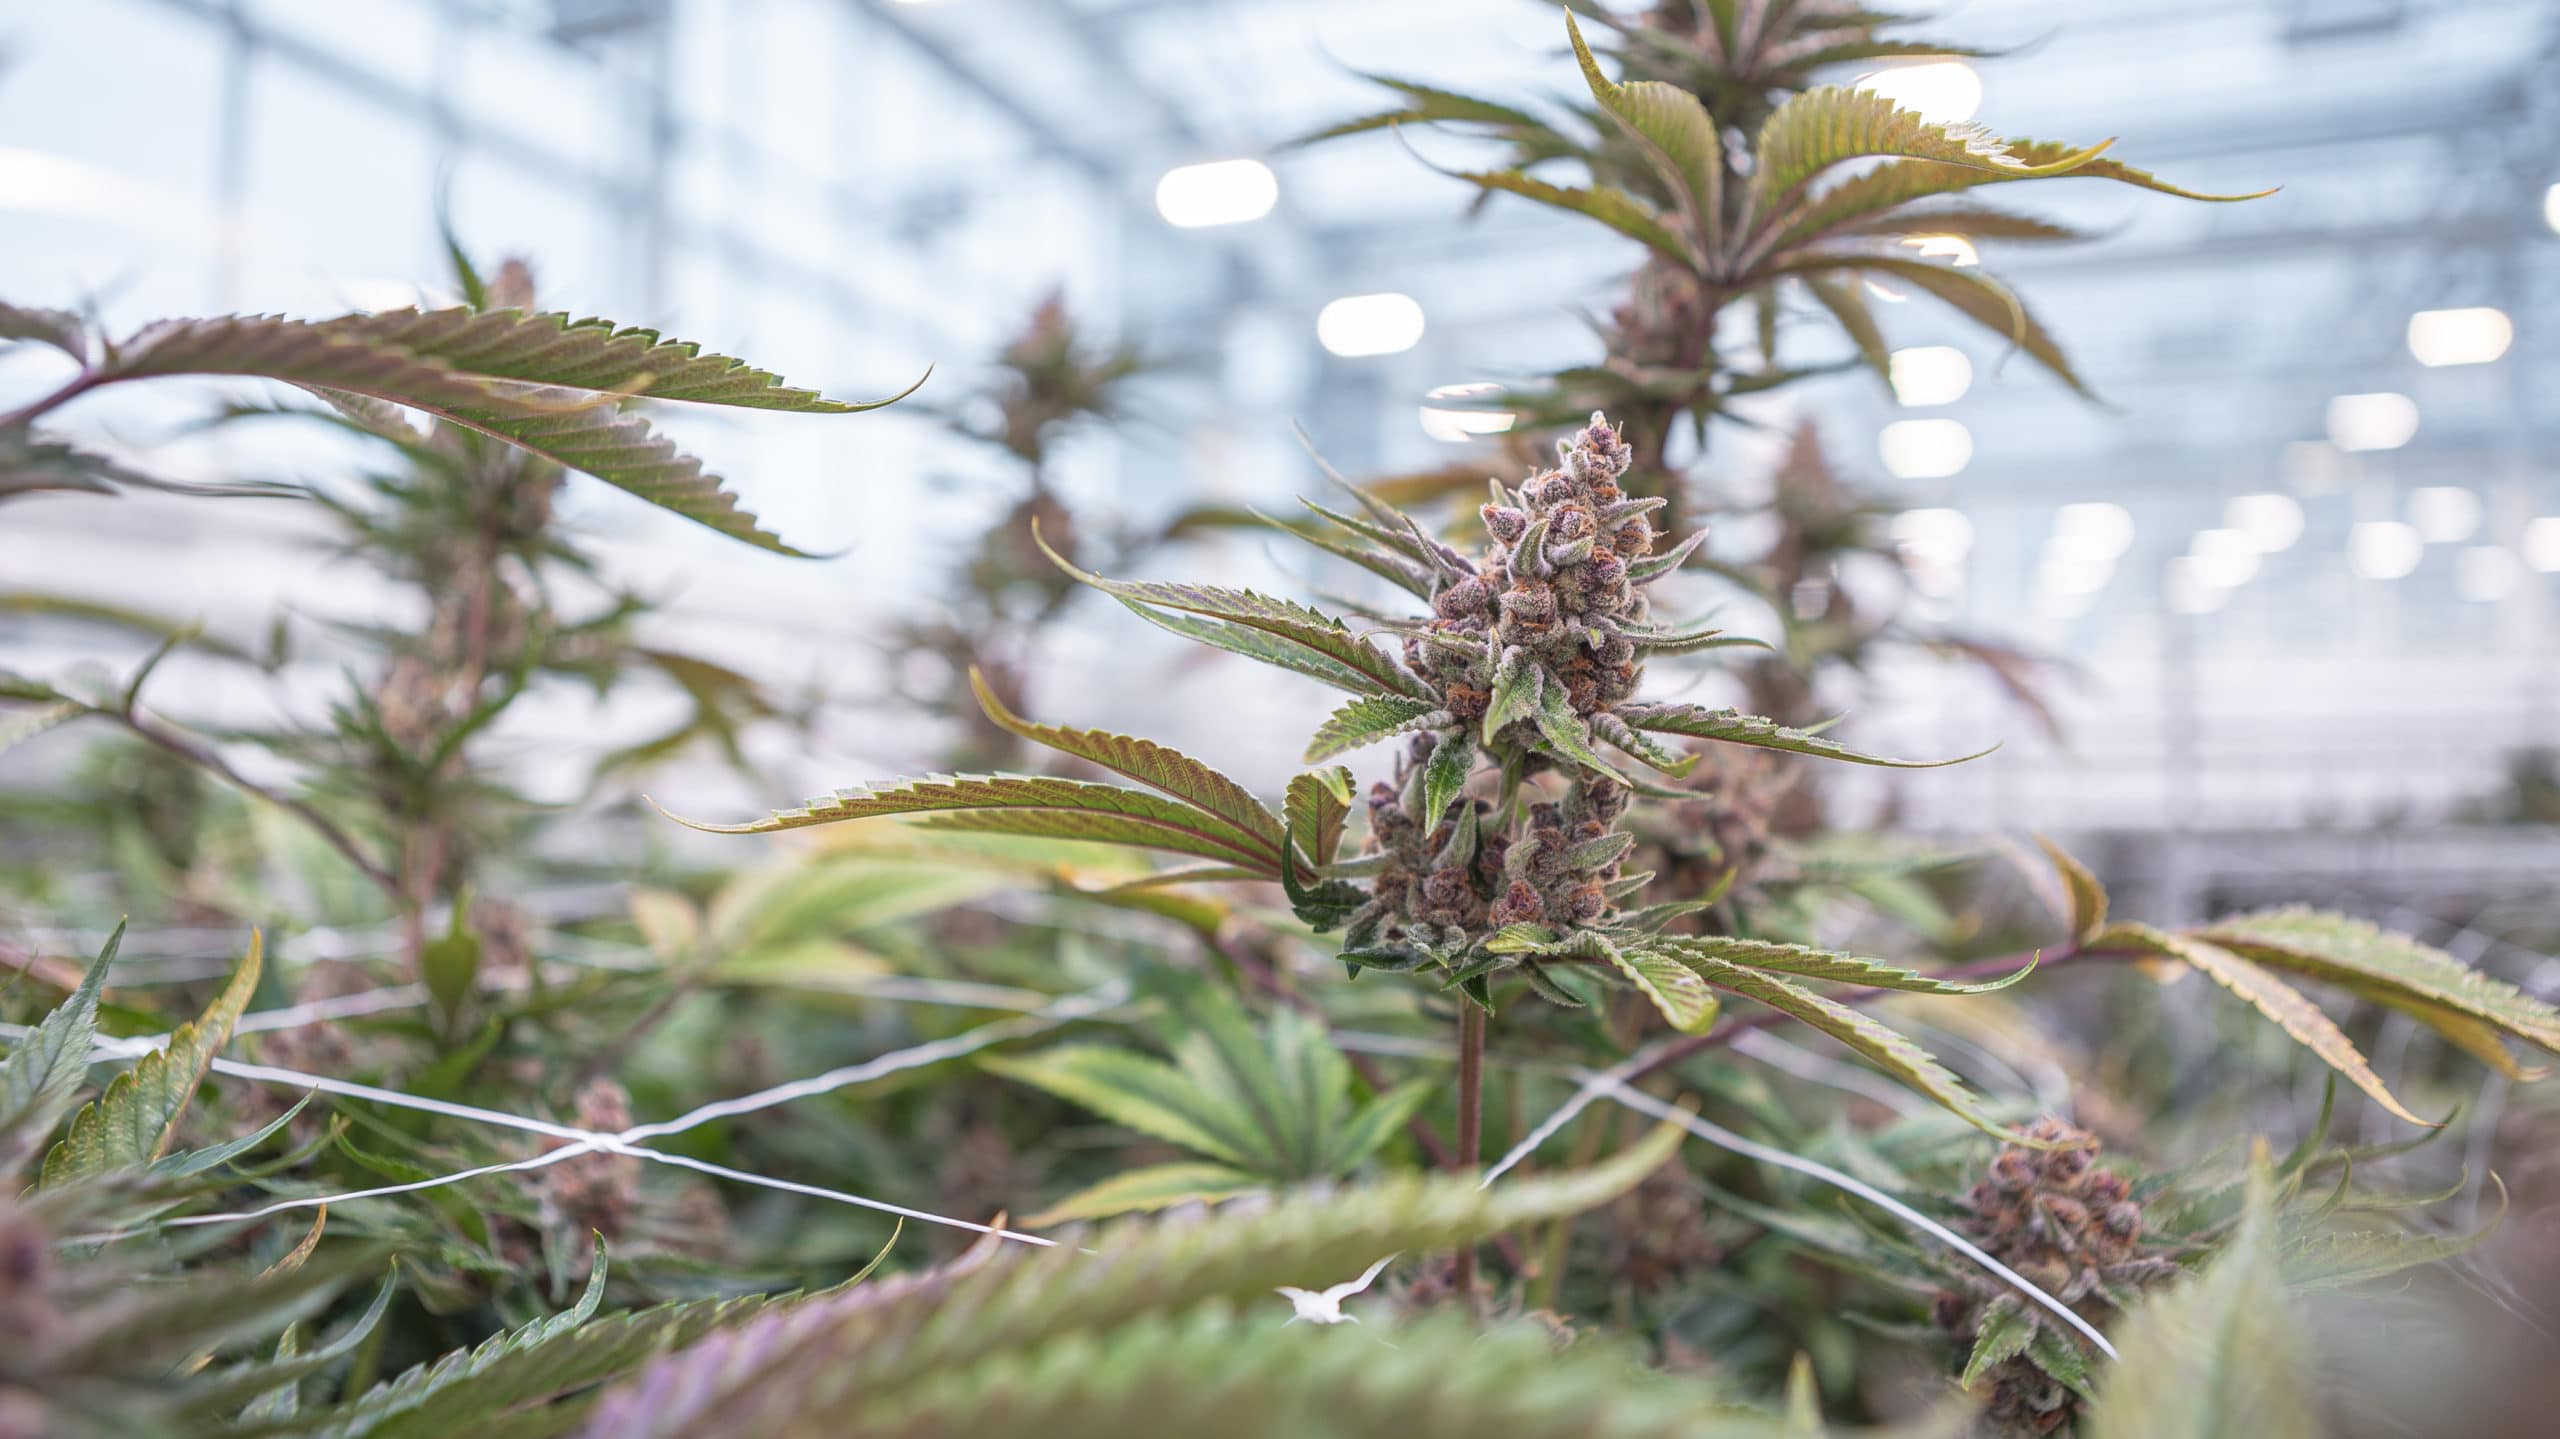 Cannabis plants at Aurora's facility